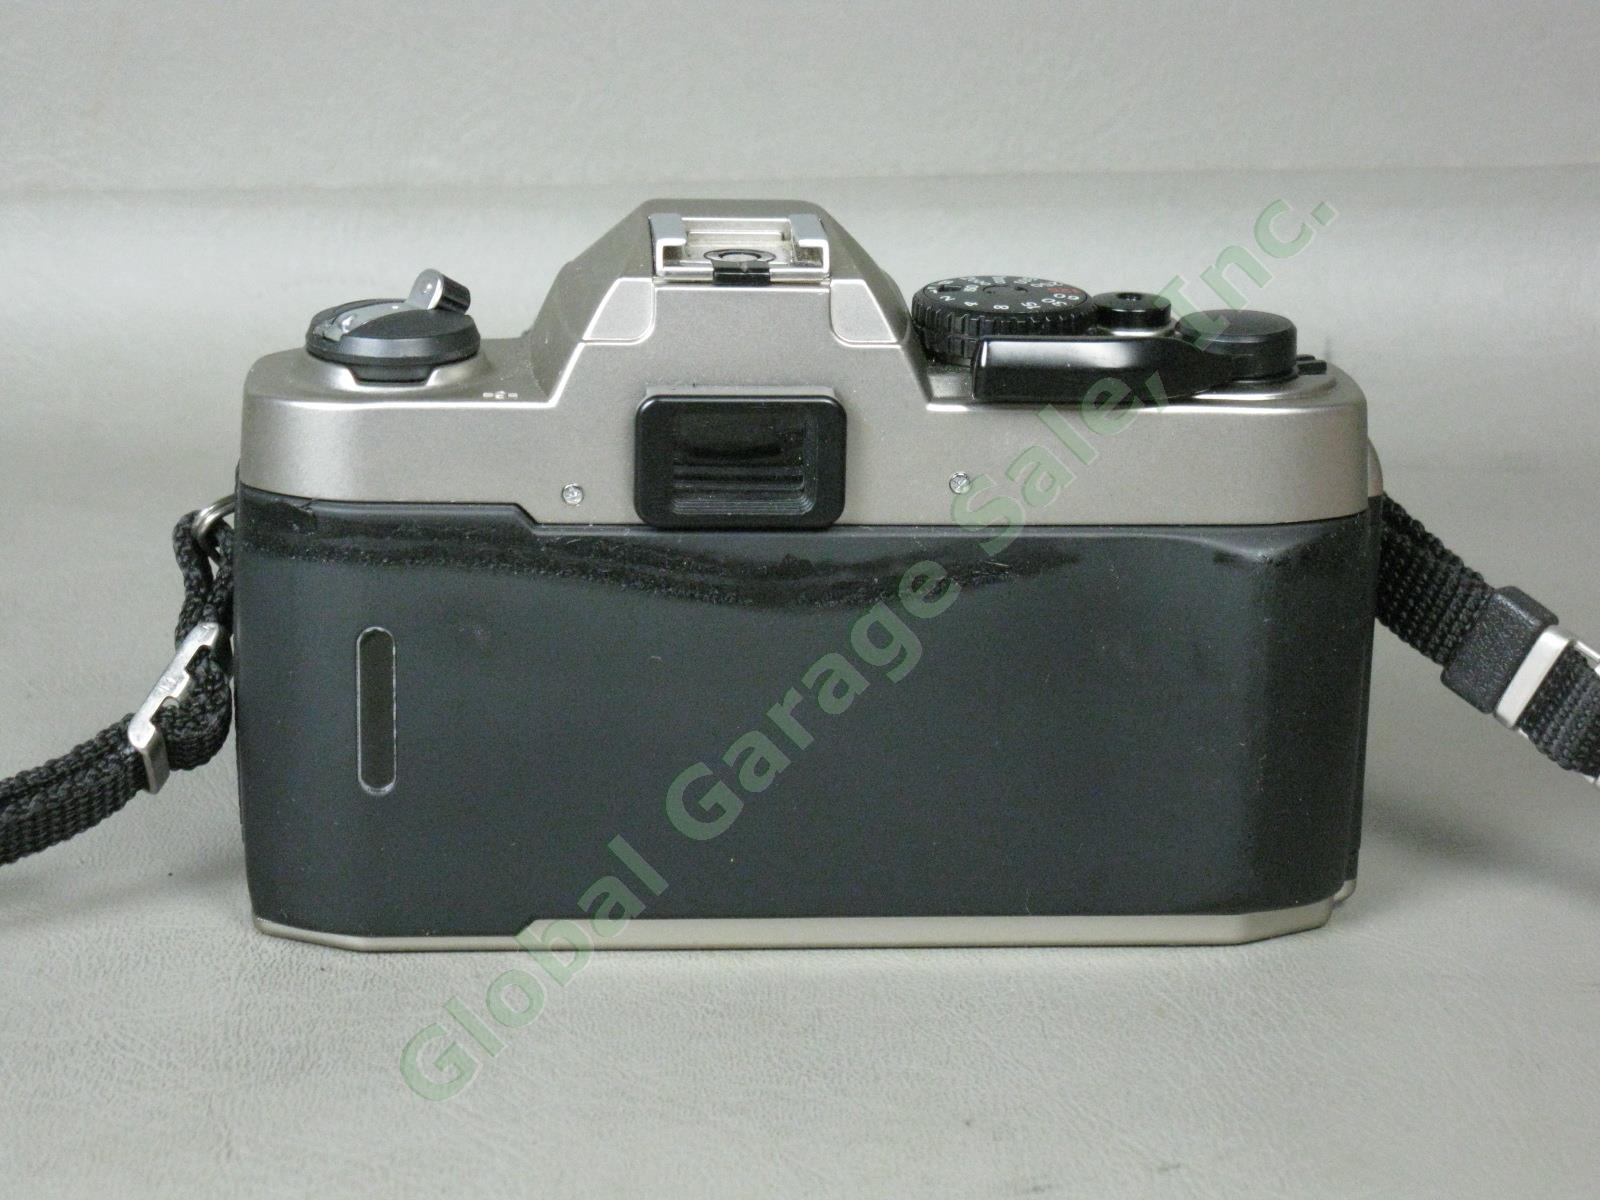 Nikon FM10 35mm SLR Film Camera Nikkor 35-70mm 1:3.5-4.8 Zoom Lens Exc Cond NR! 4